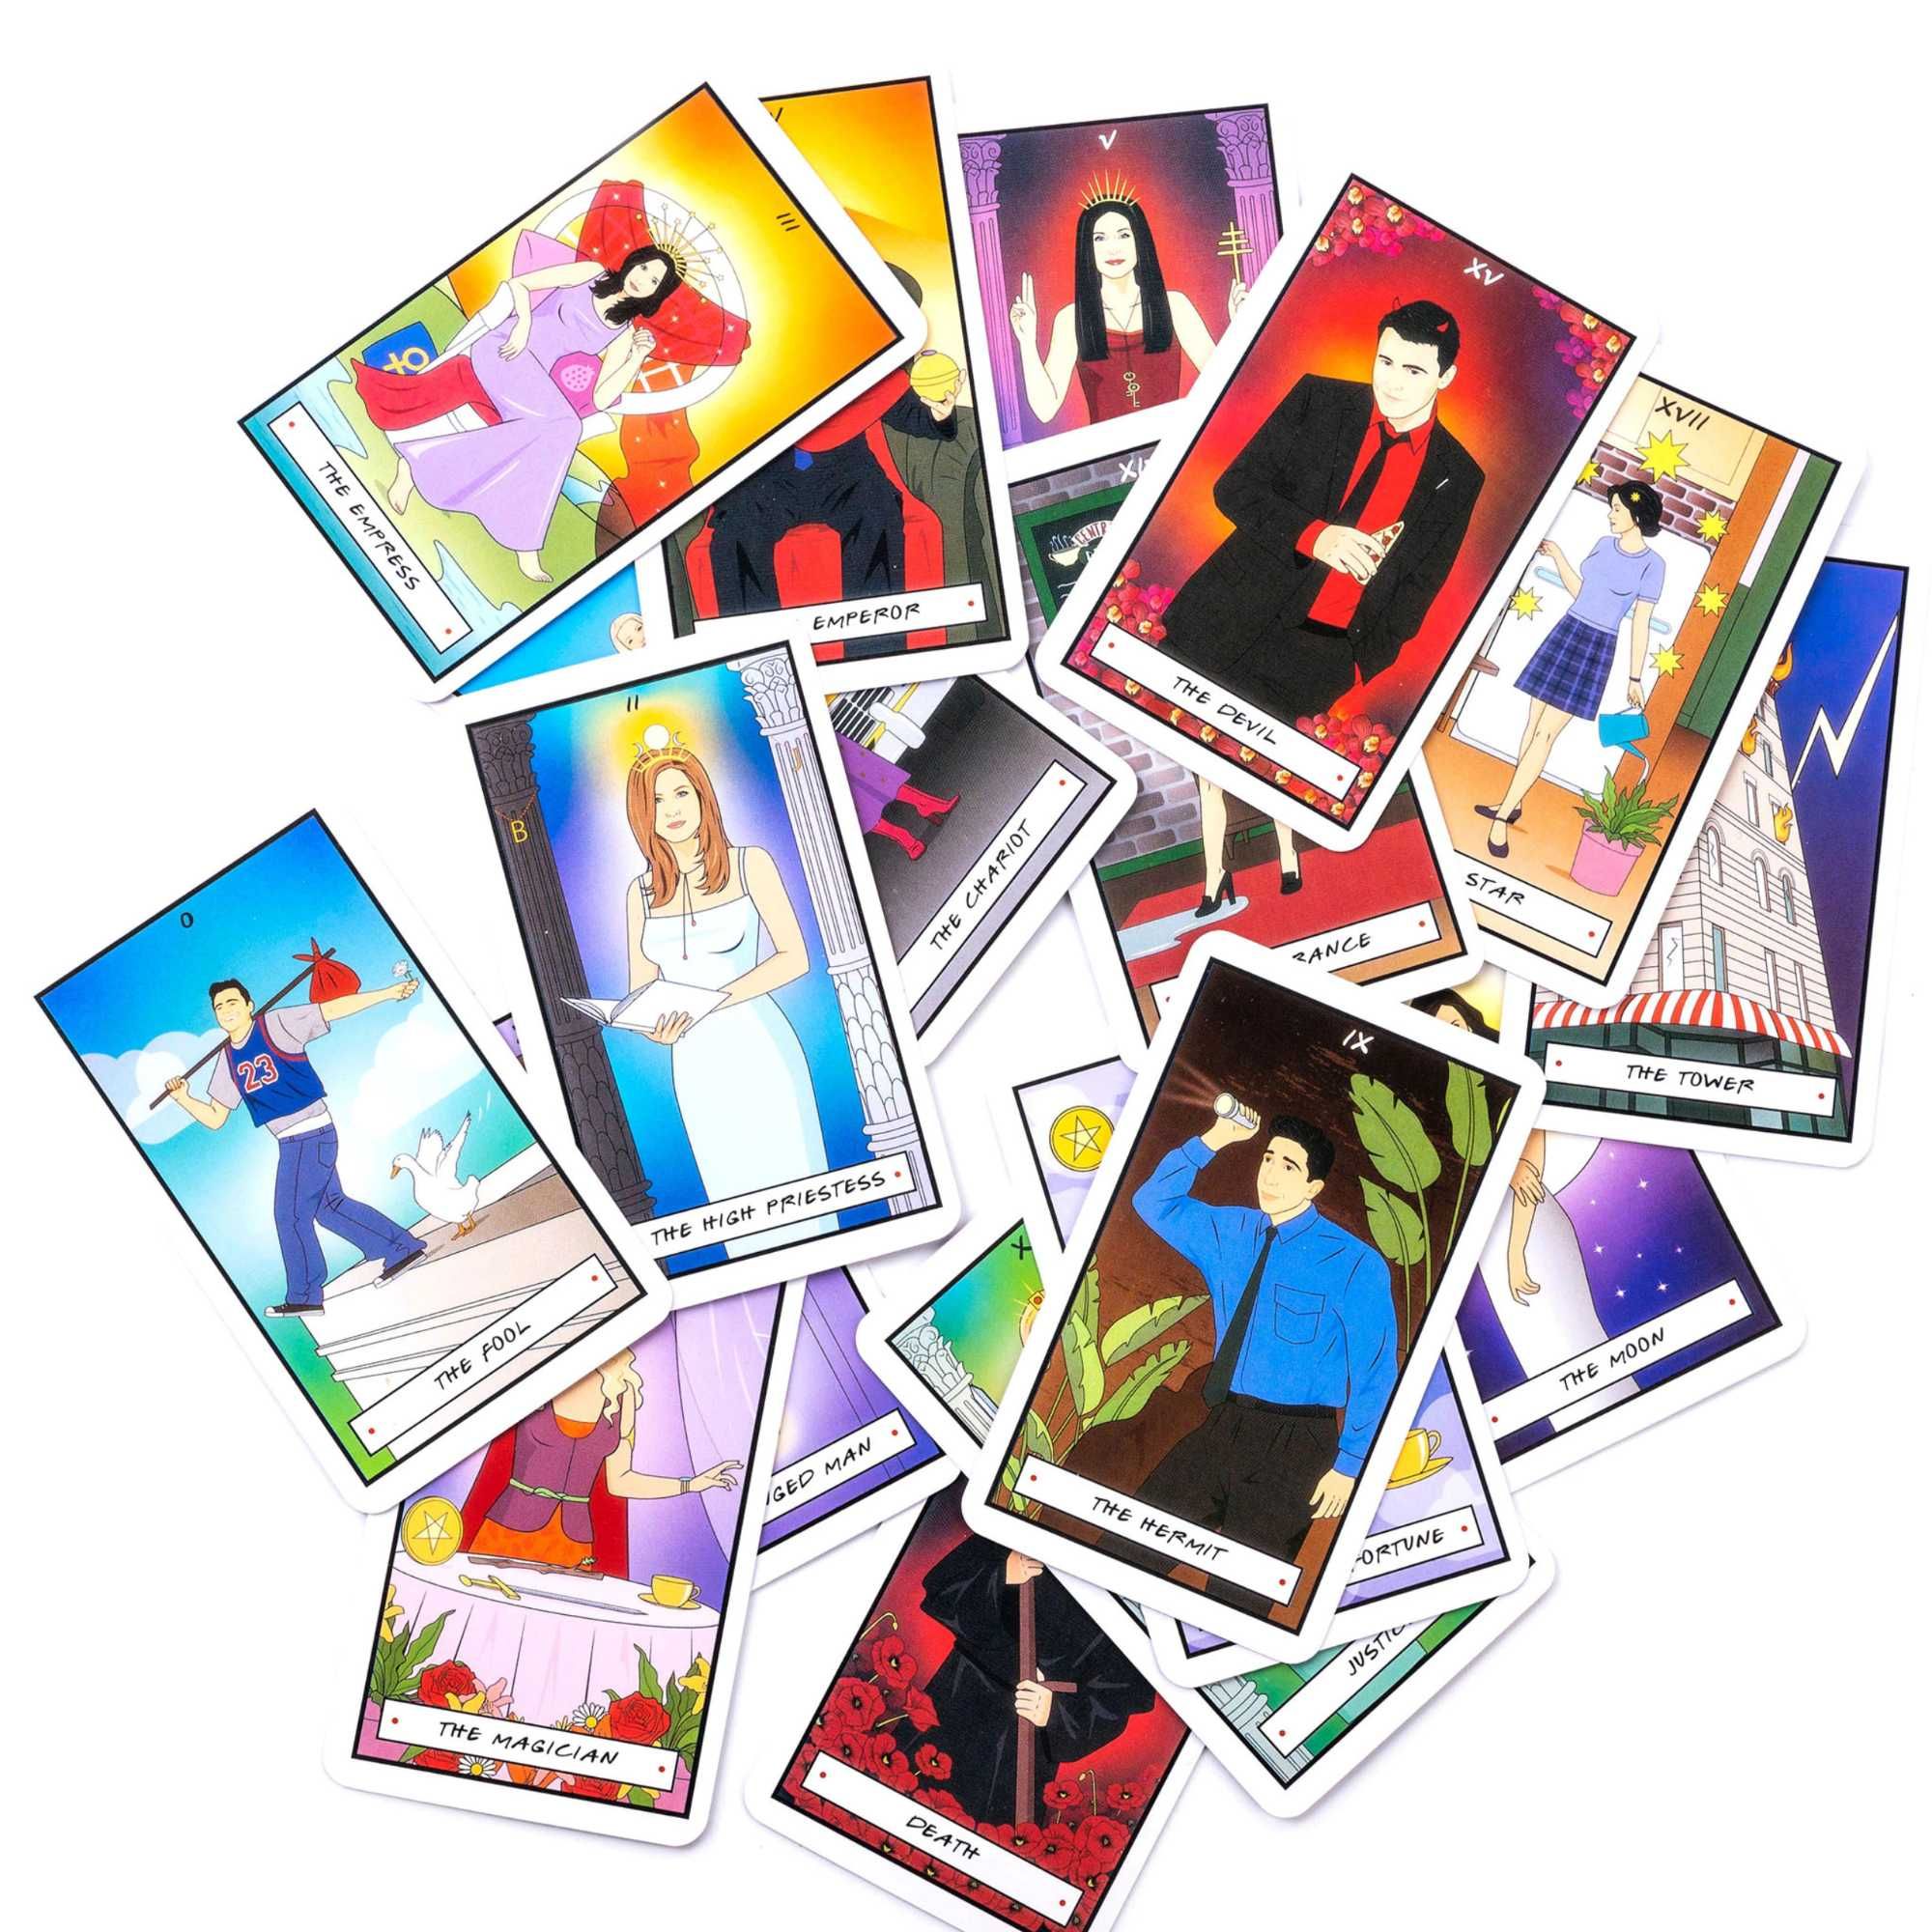 Таро карти: TV Series Tarot & Friends Tarot & Crystal Visions Tarot